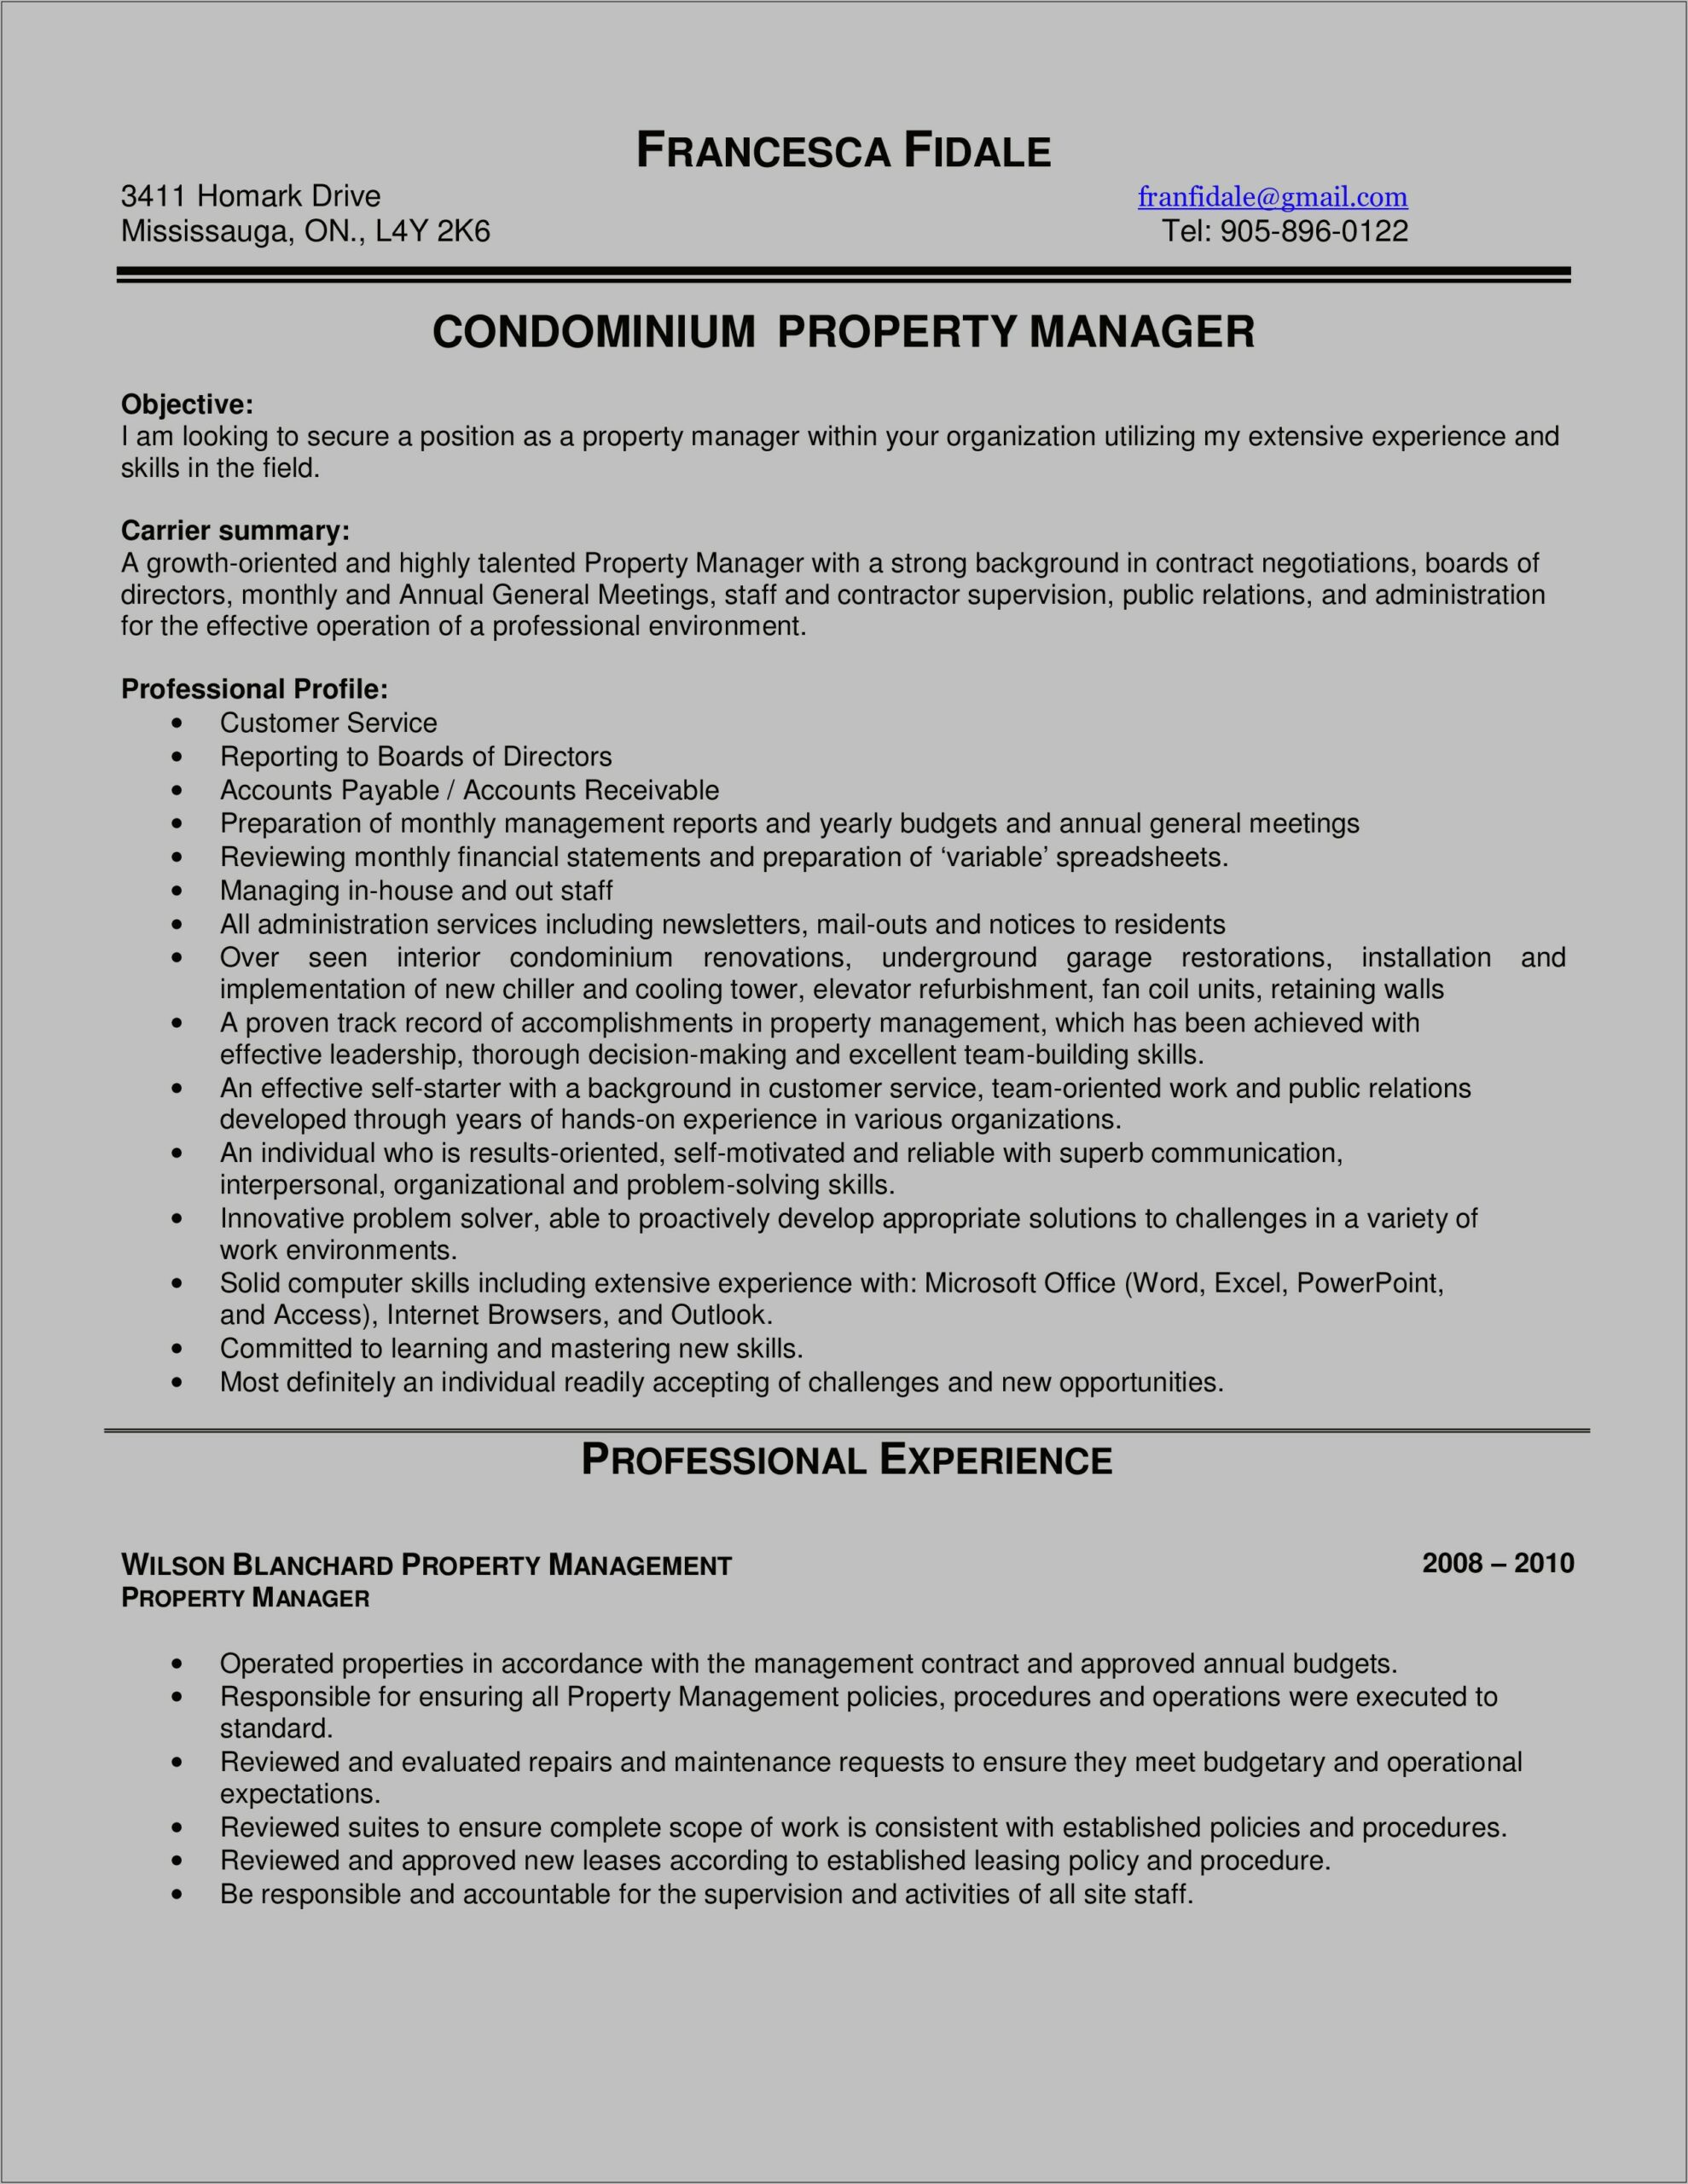 Resume Skills For Property Management